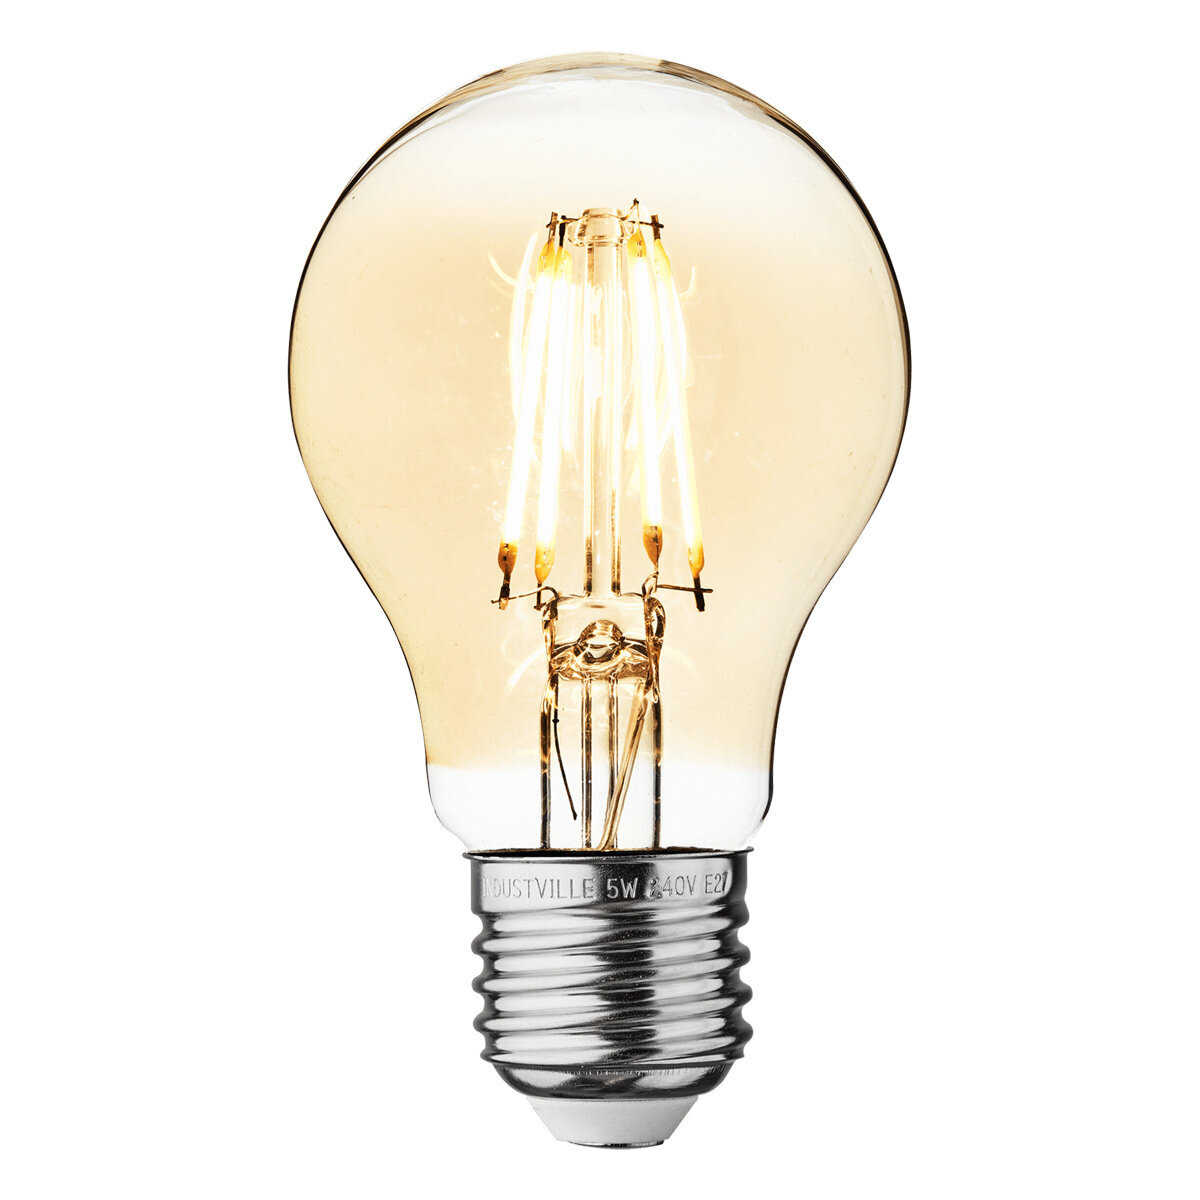 Industville - Vintage LED Edison Bulb Old Filament Lamp - Classic A60